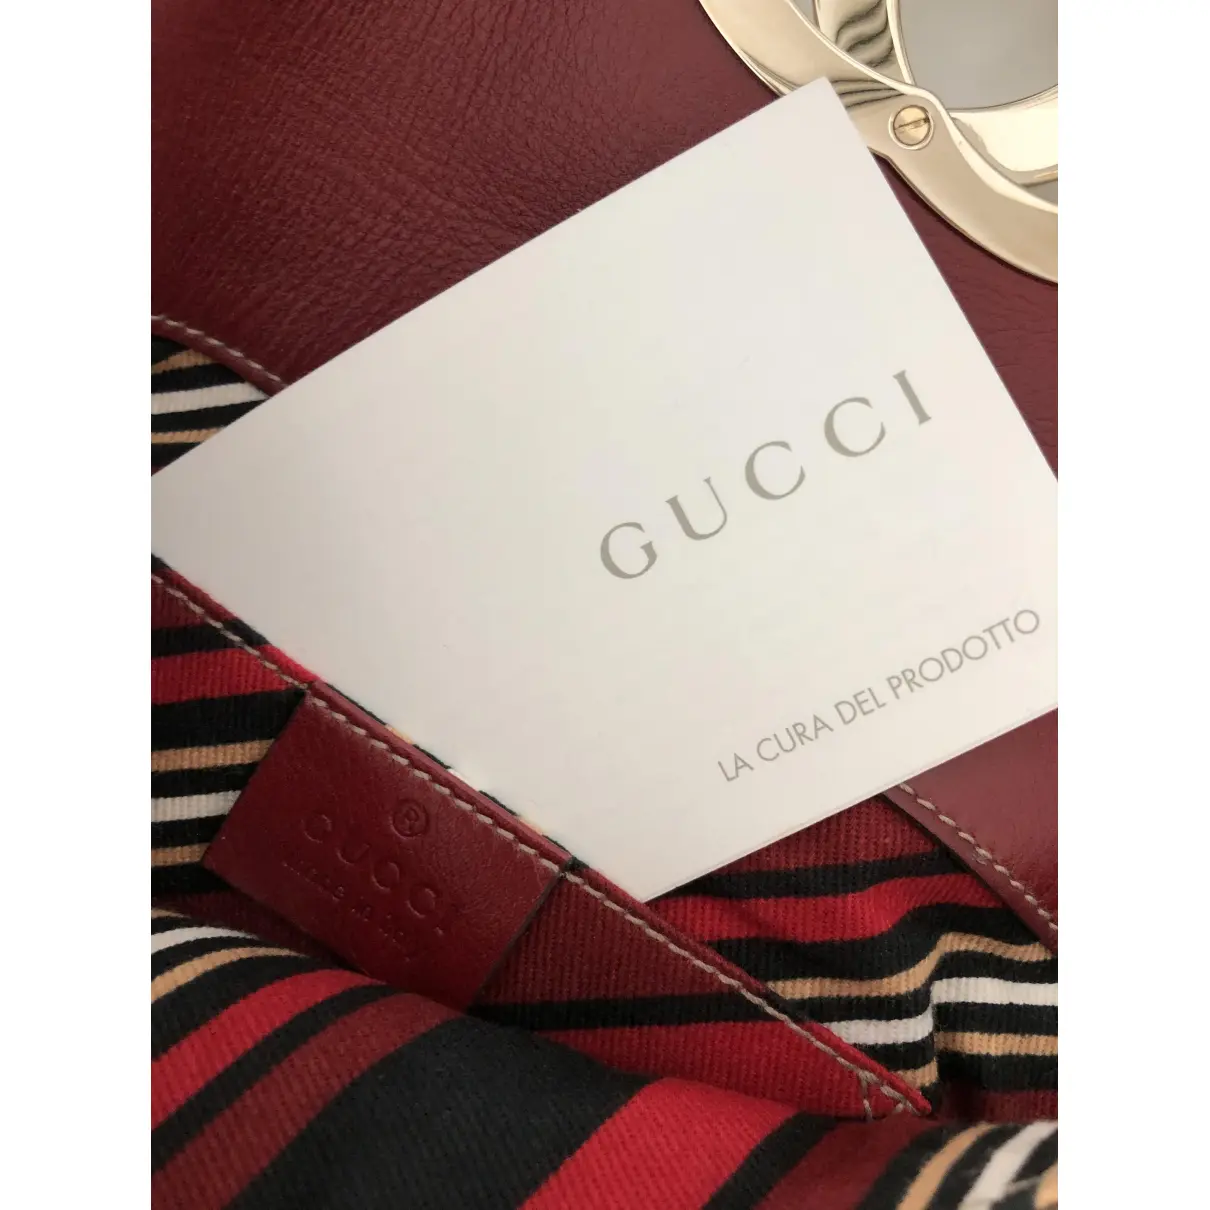 Buy Gucci Interlocking mini bag online